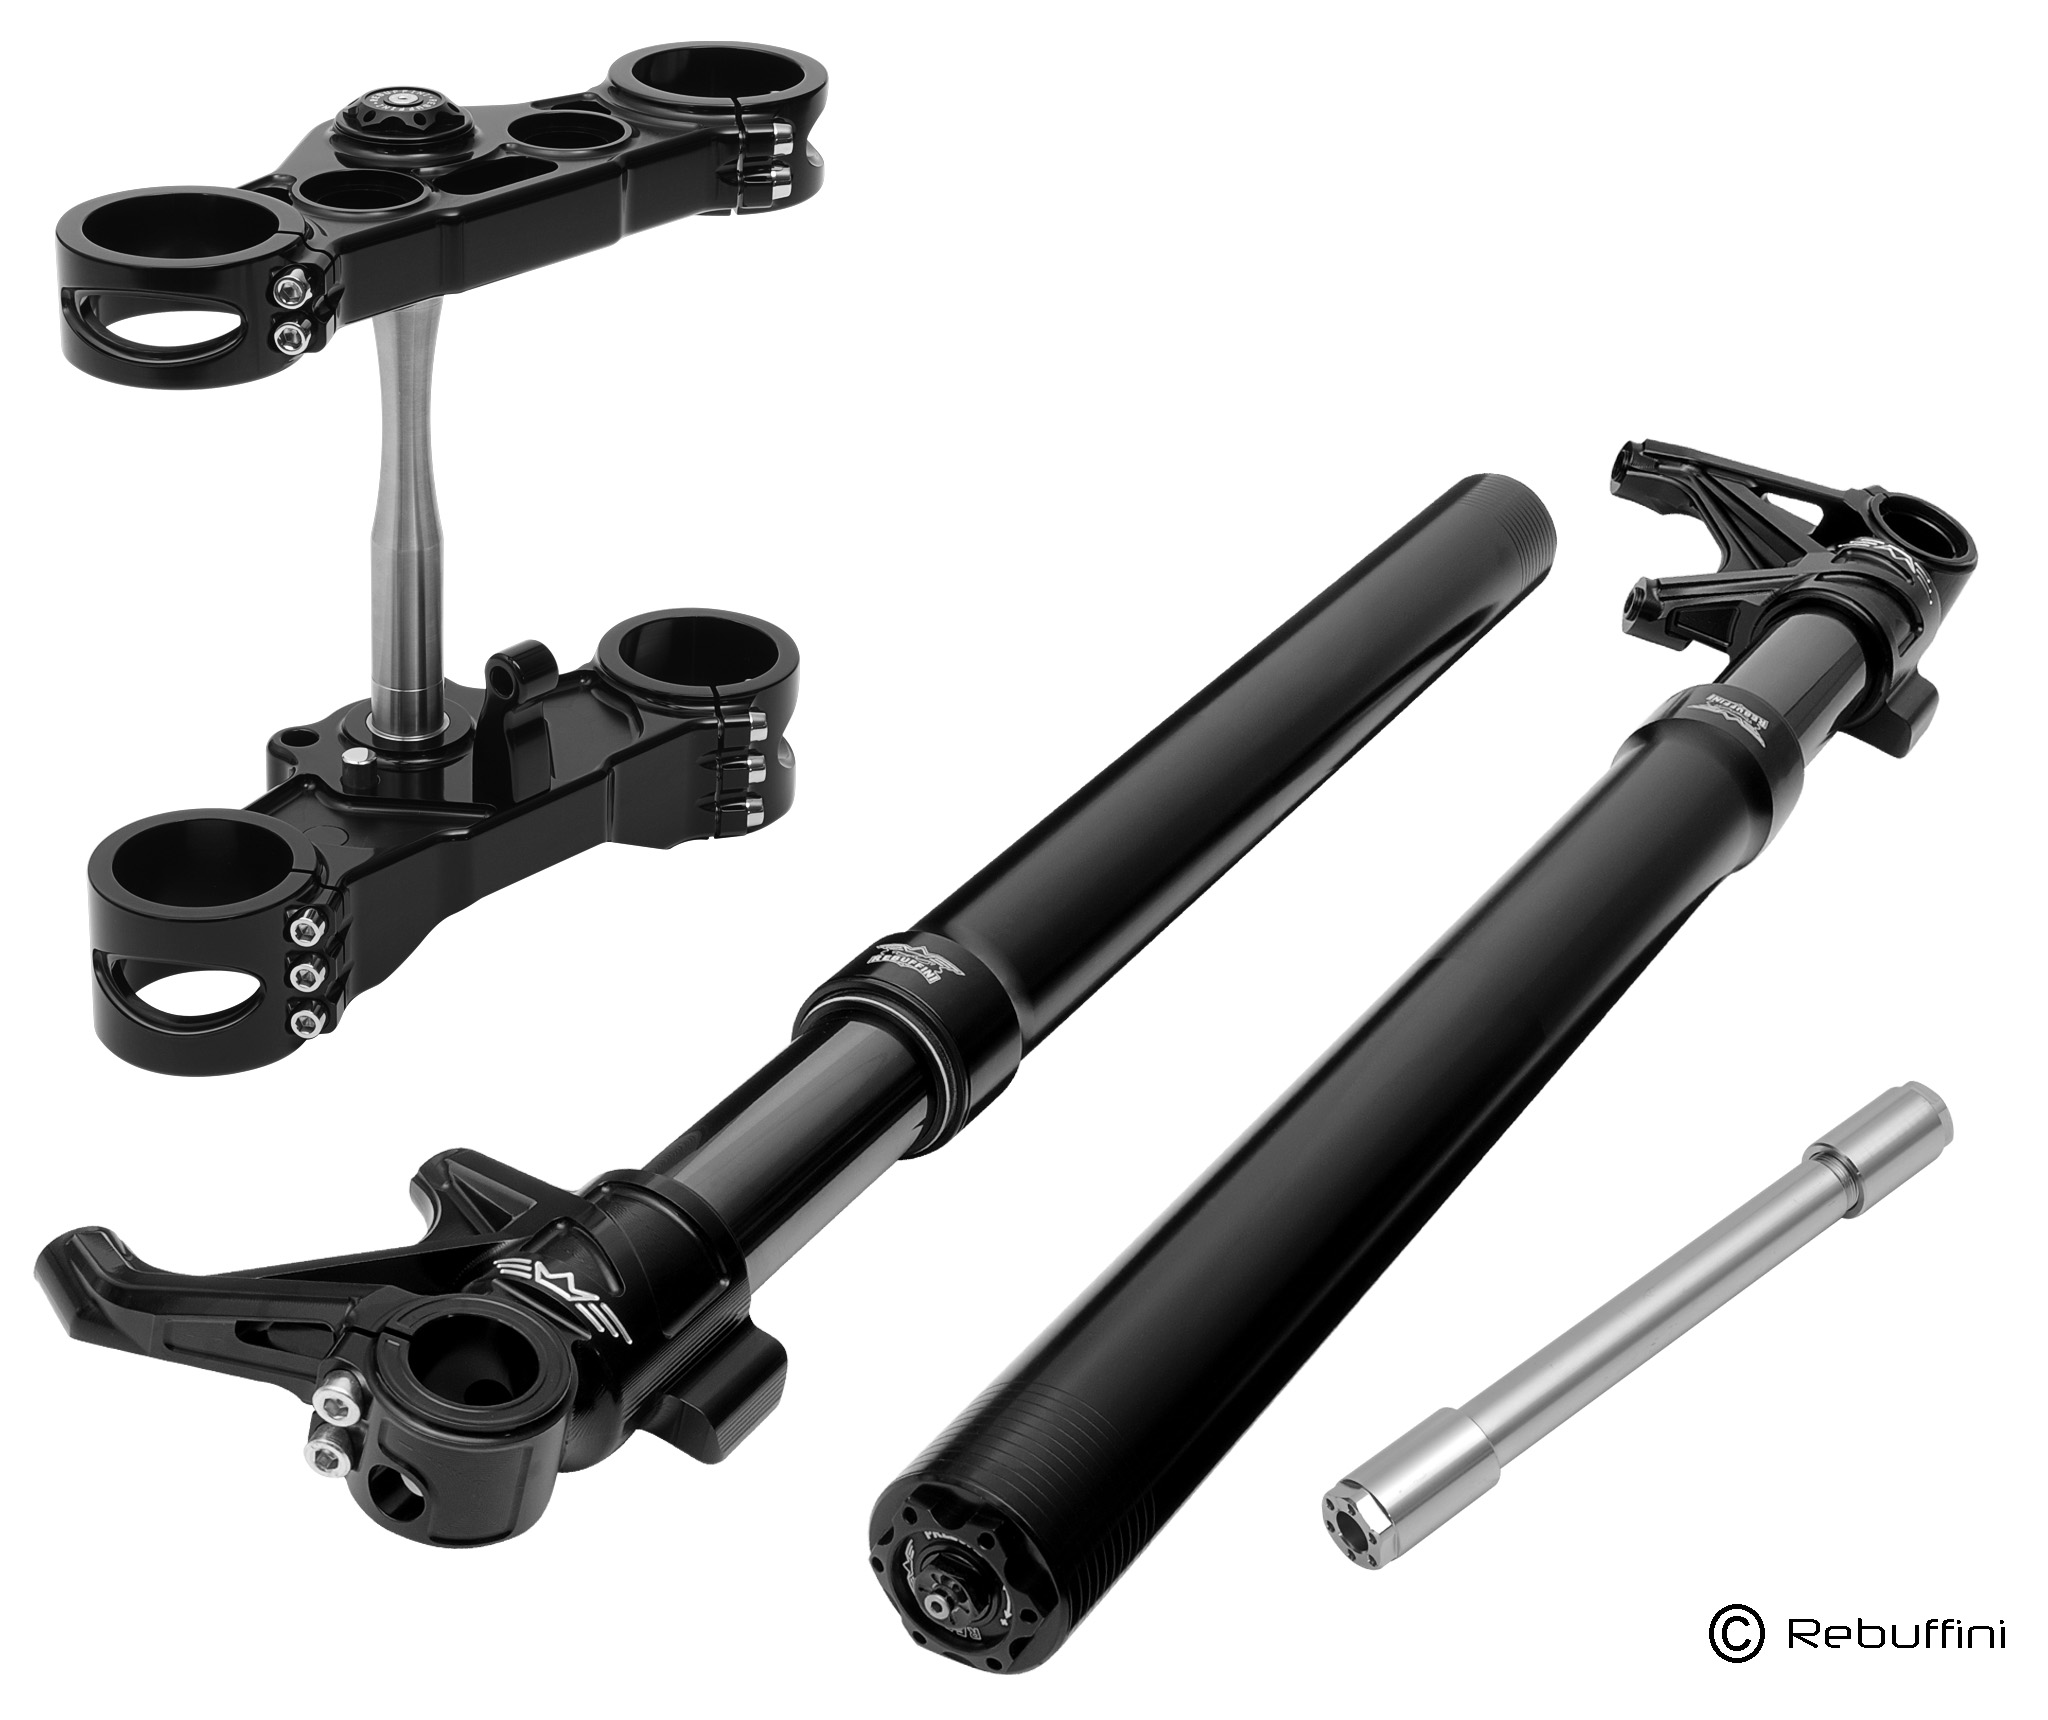 Inverted front fork for Harley-Davidson Dyna, FXR, Softail, V-Rod – Nexo  5.0